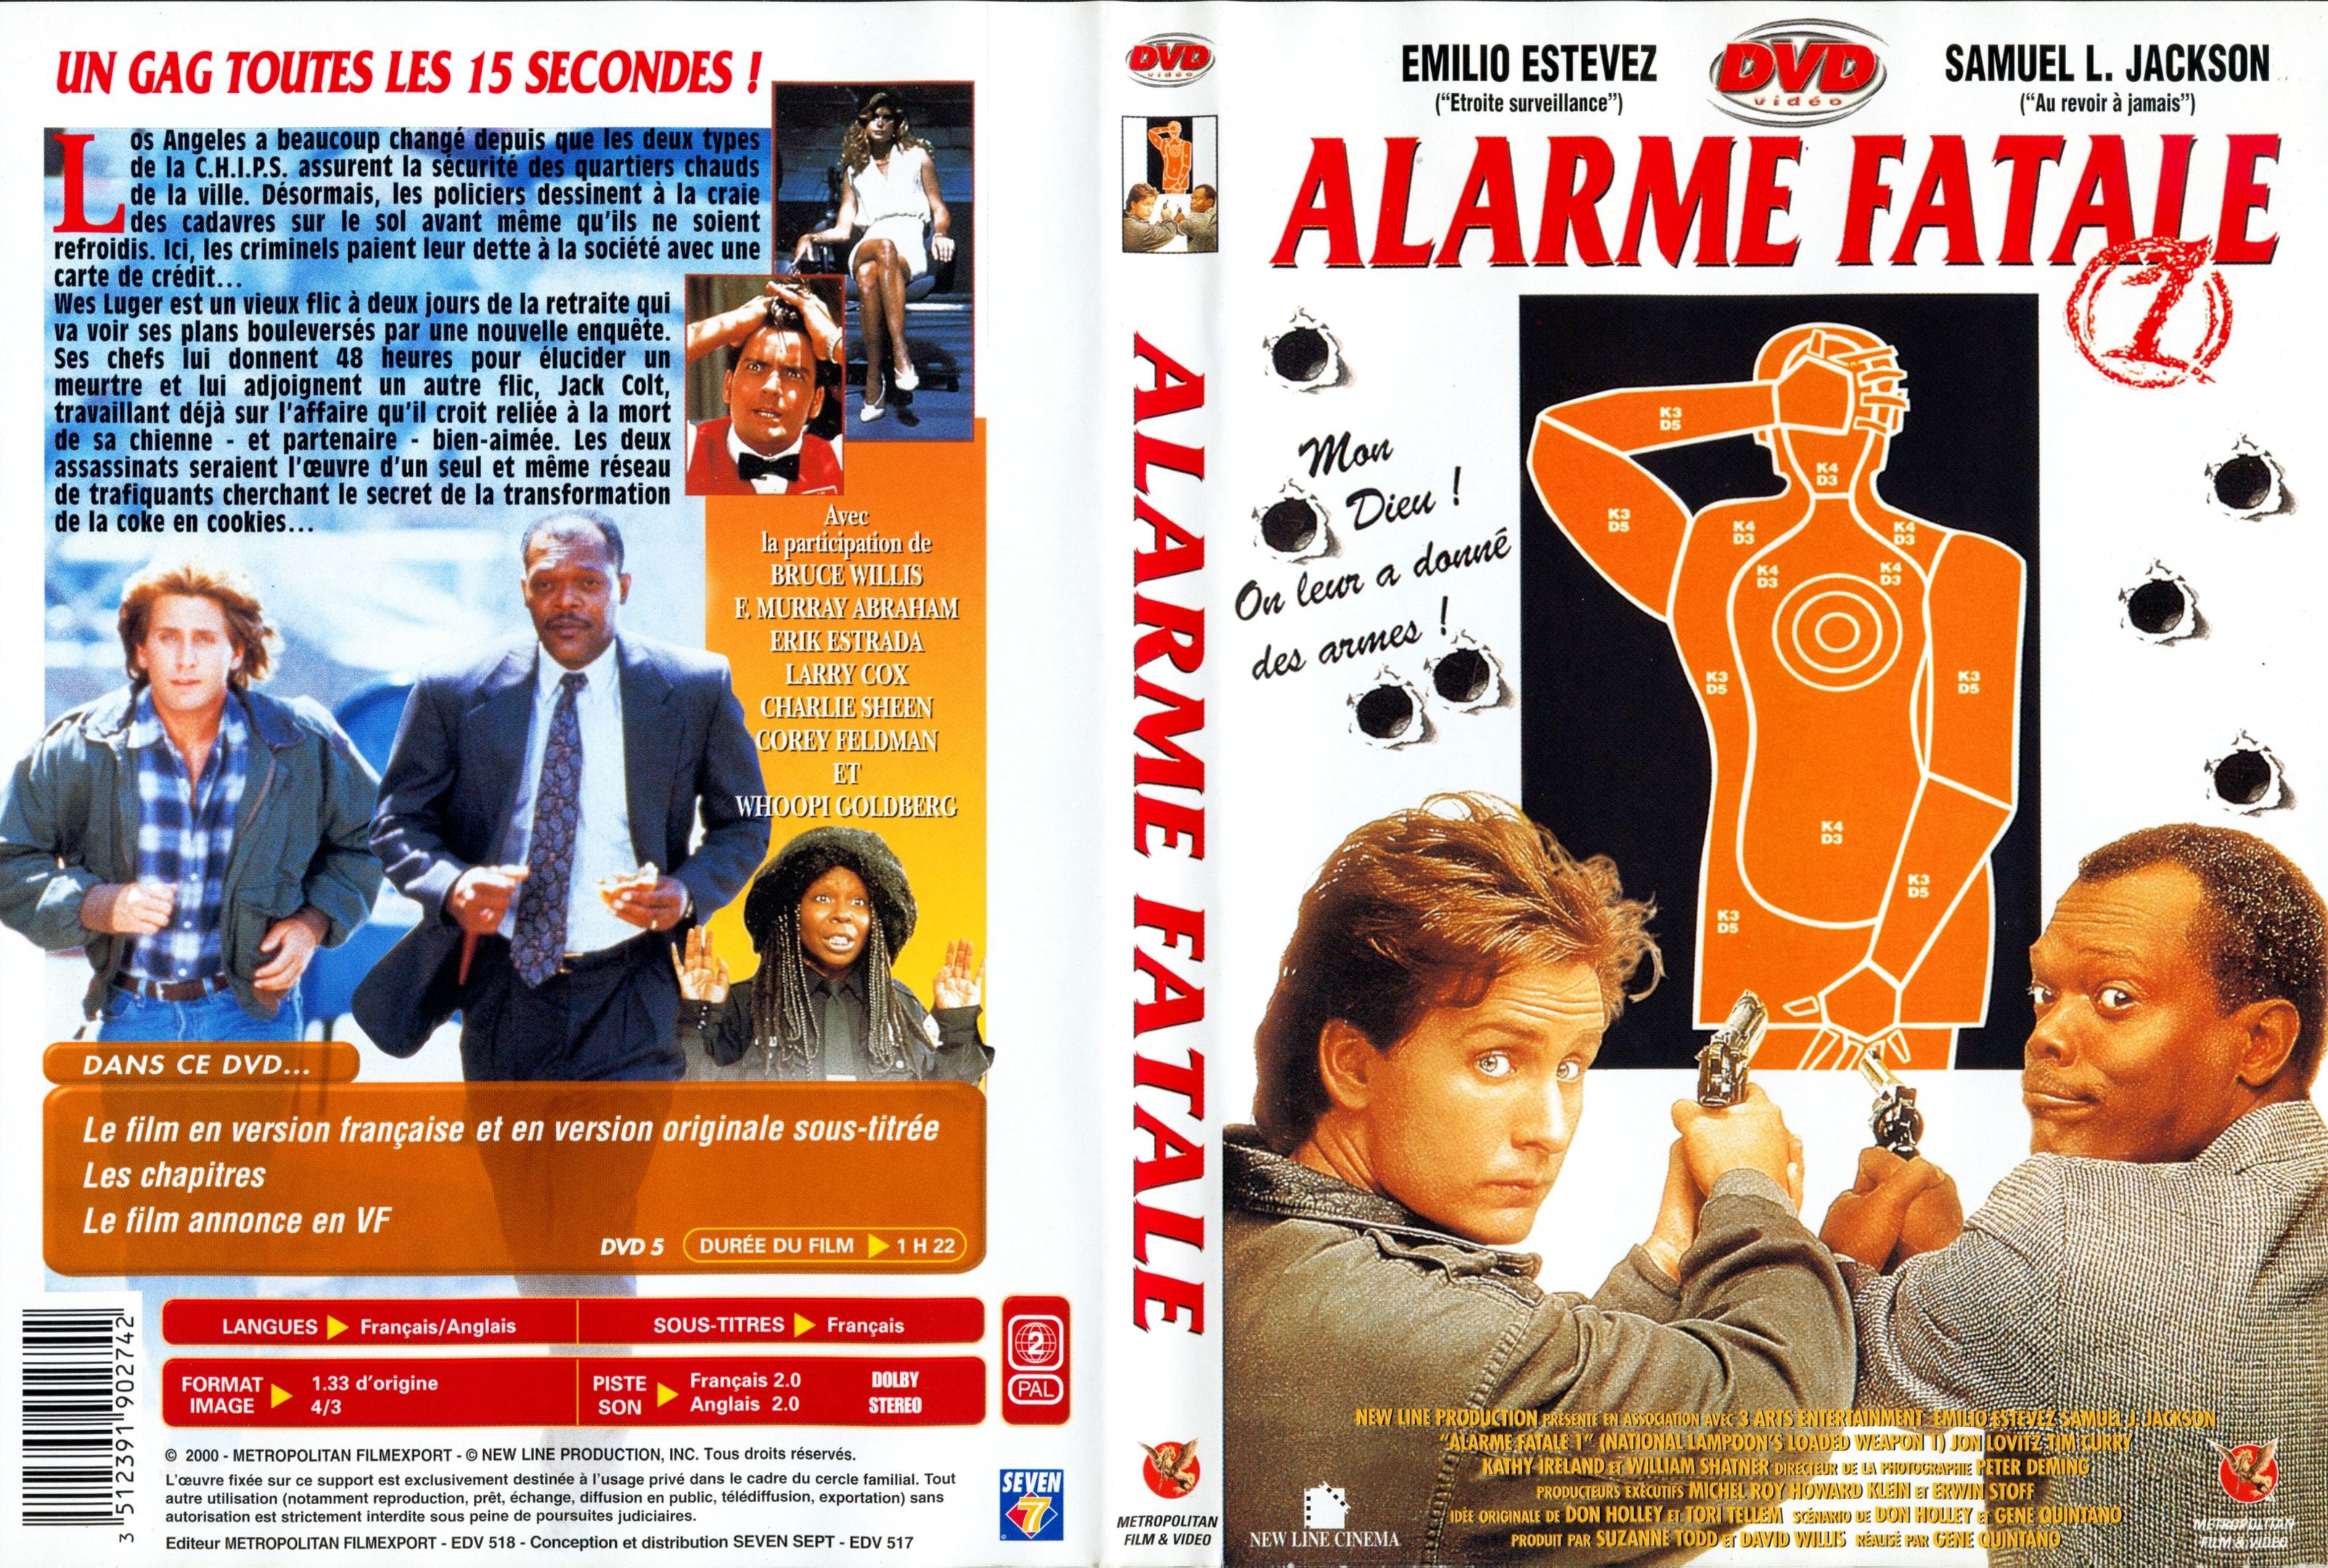 Jaquette DVD Alarme fatale